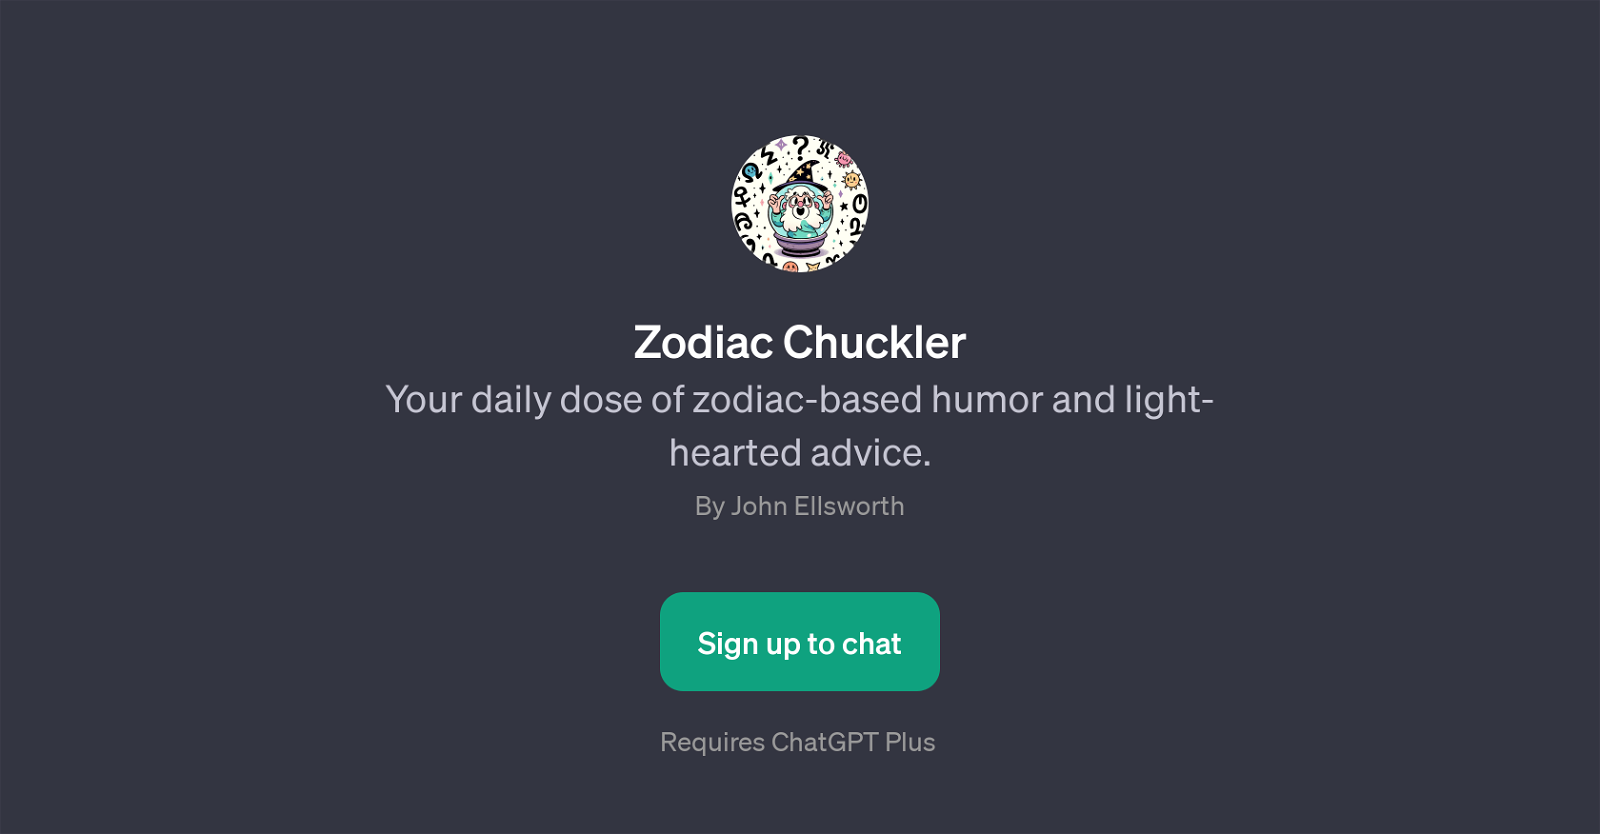 Zodiac Chuckler website